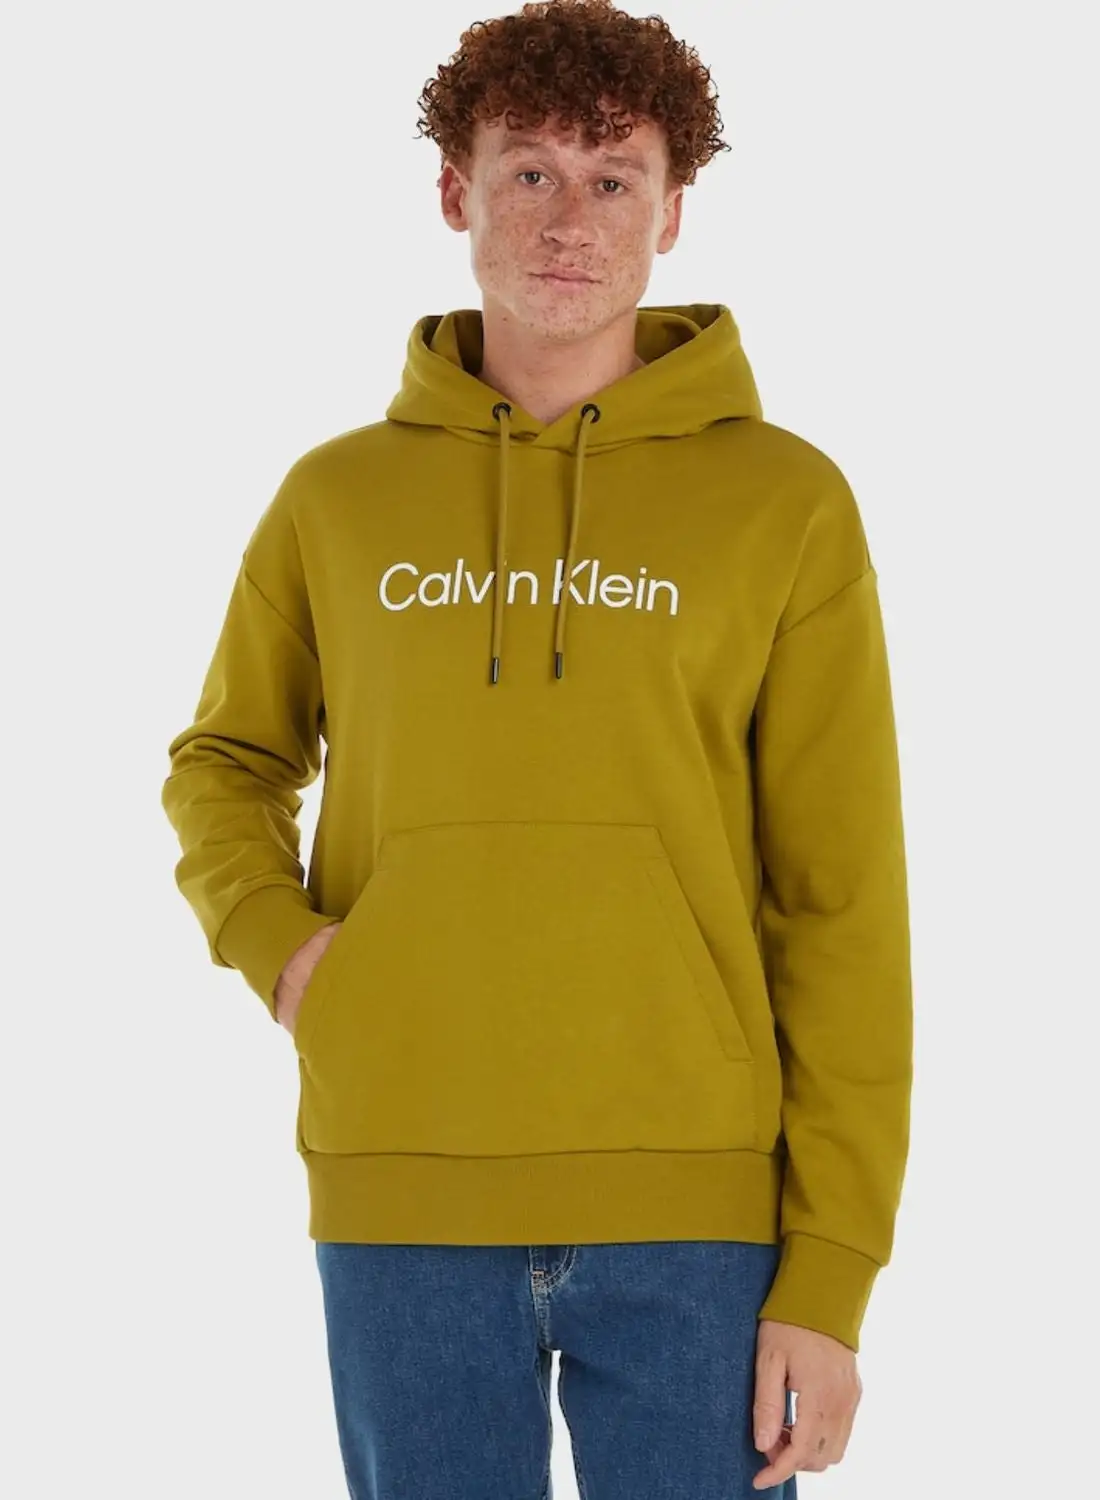 CALVIN KLEIN Logo Hoodie